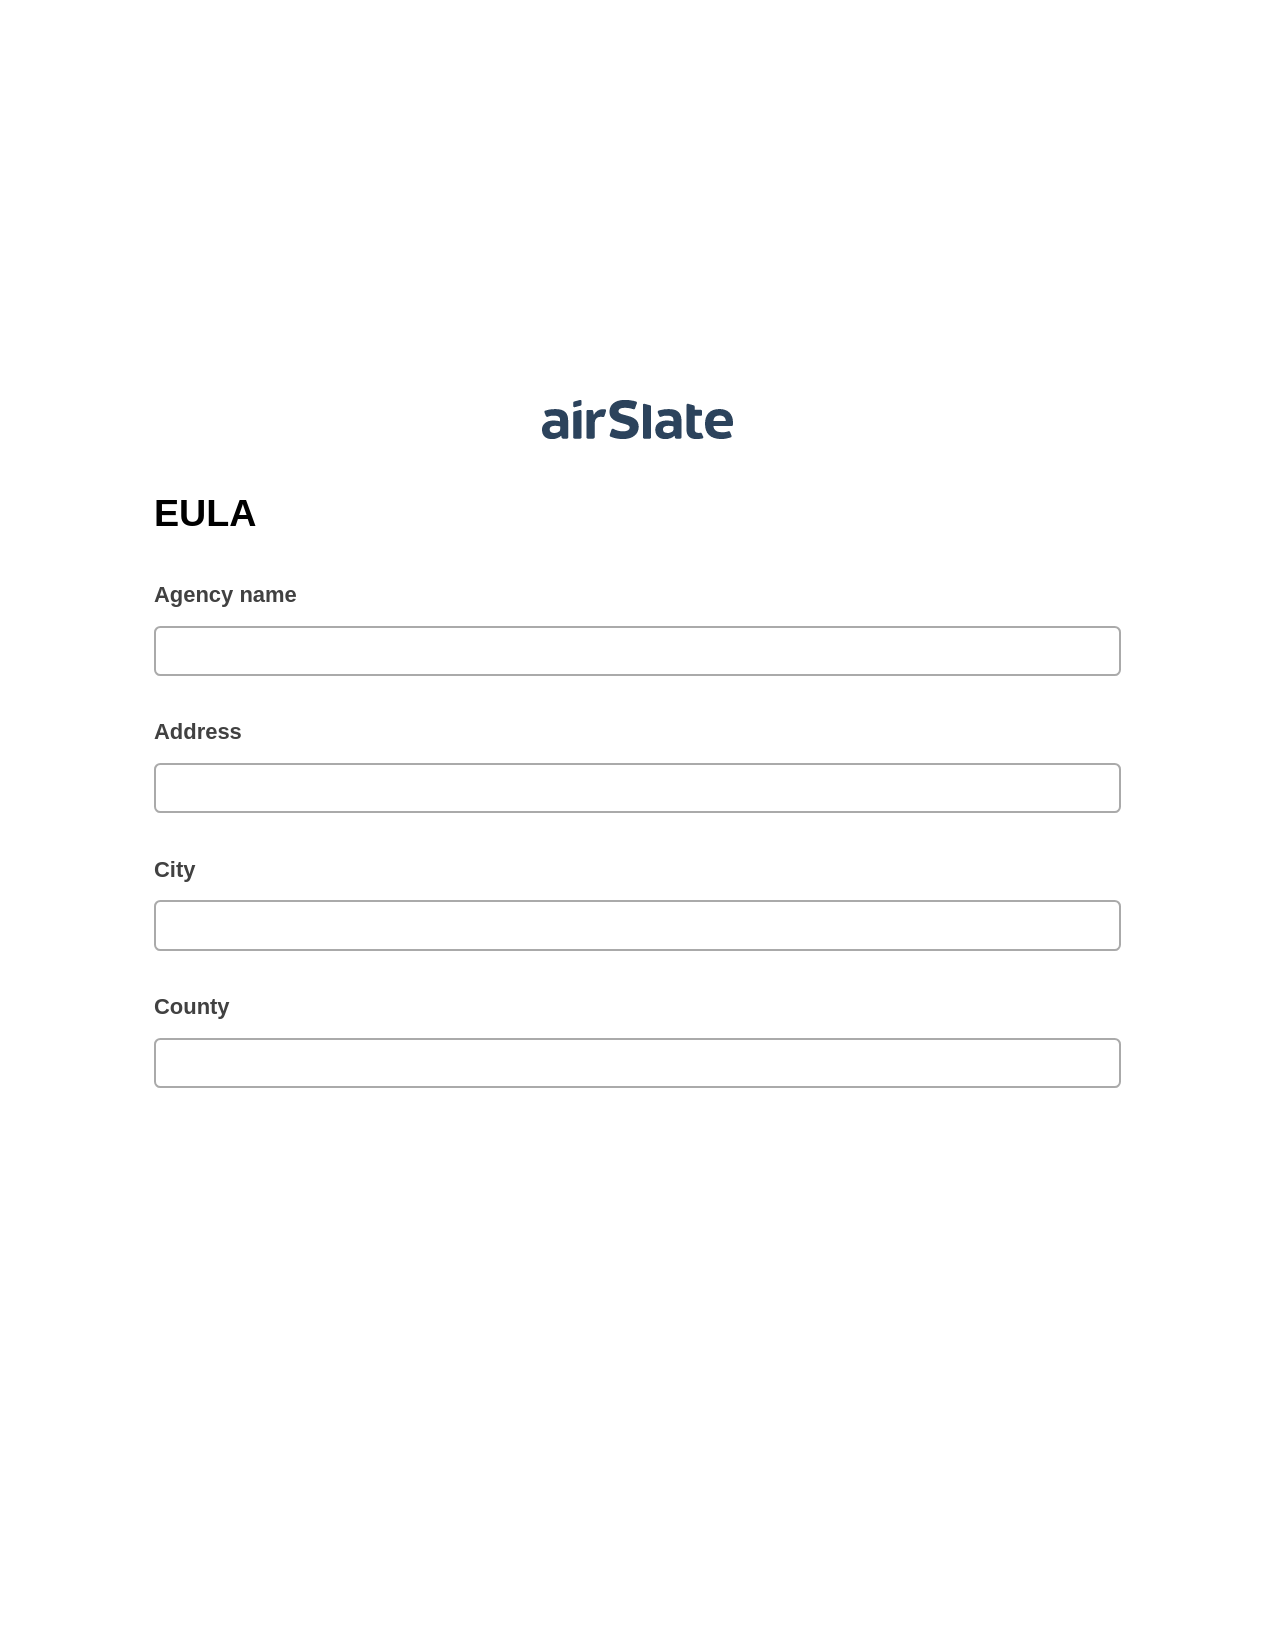 EULA Pre-fill from Google Sheet Dropdown Options Bot, Reminder Bot, Export to MySQL Bot